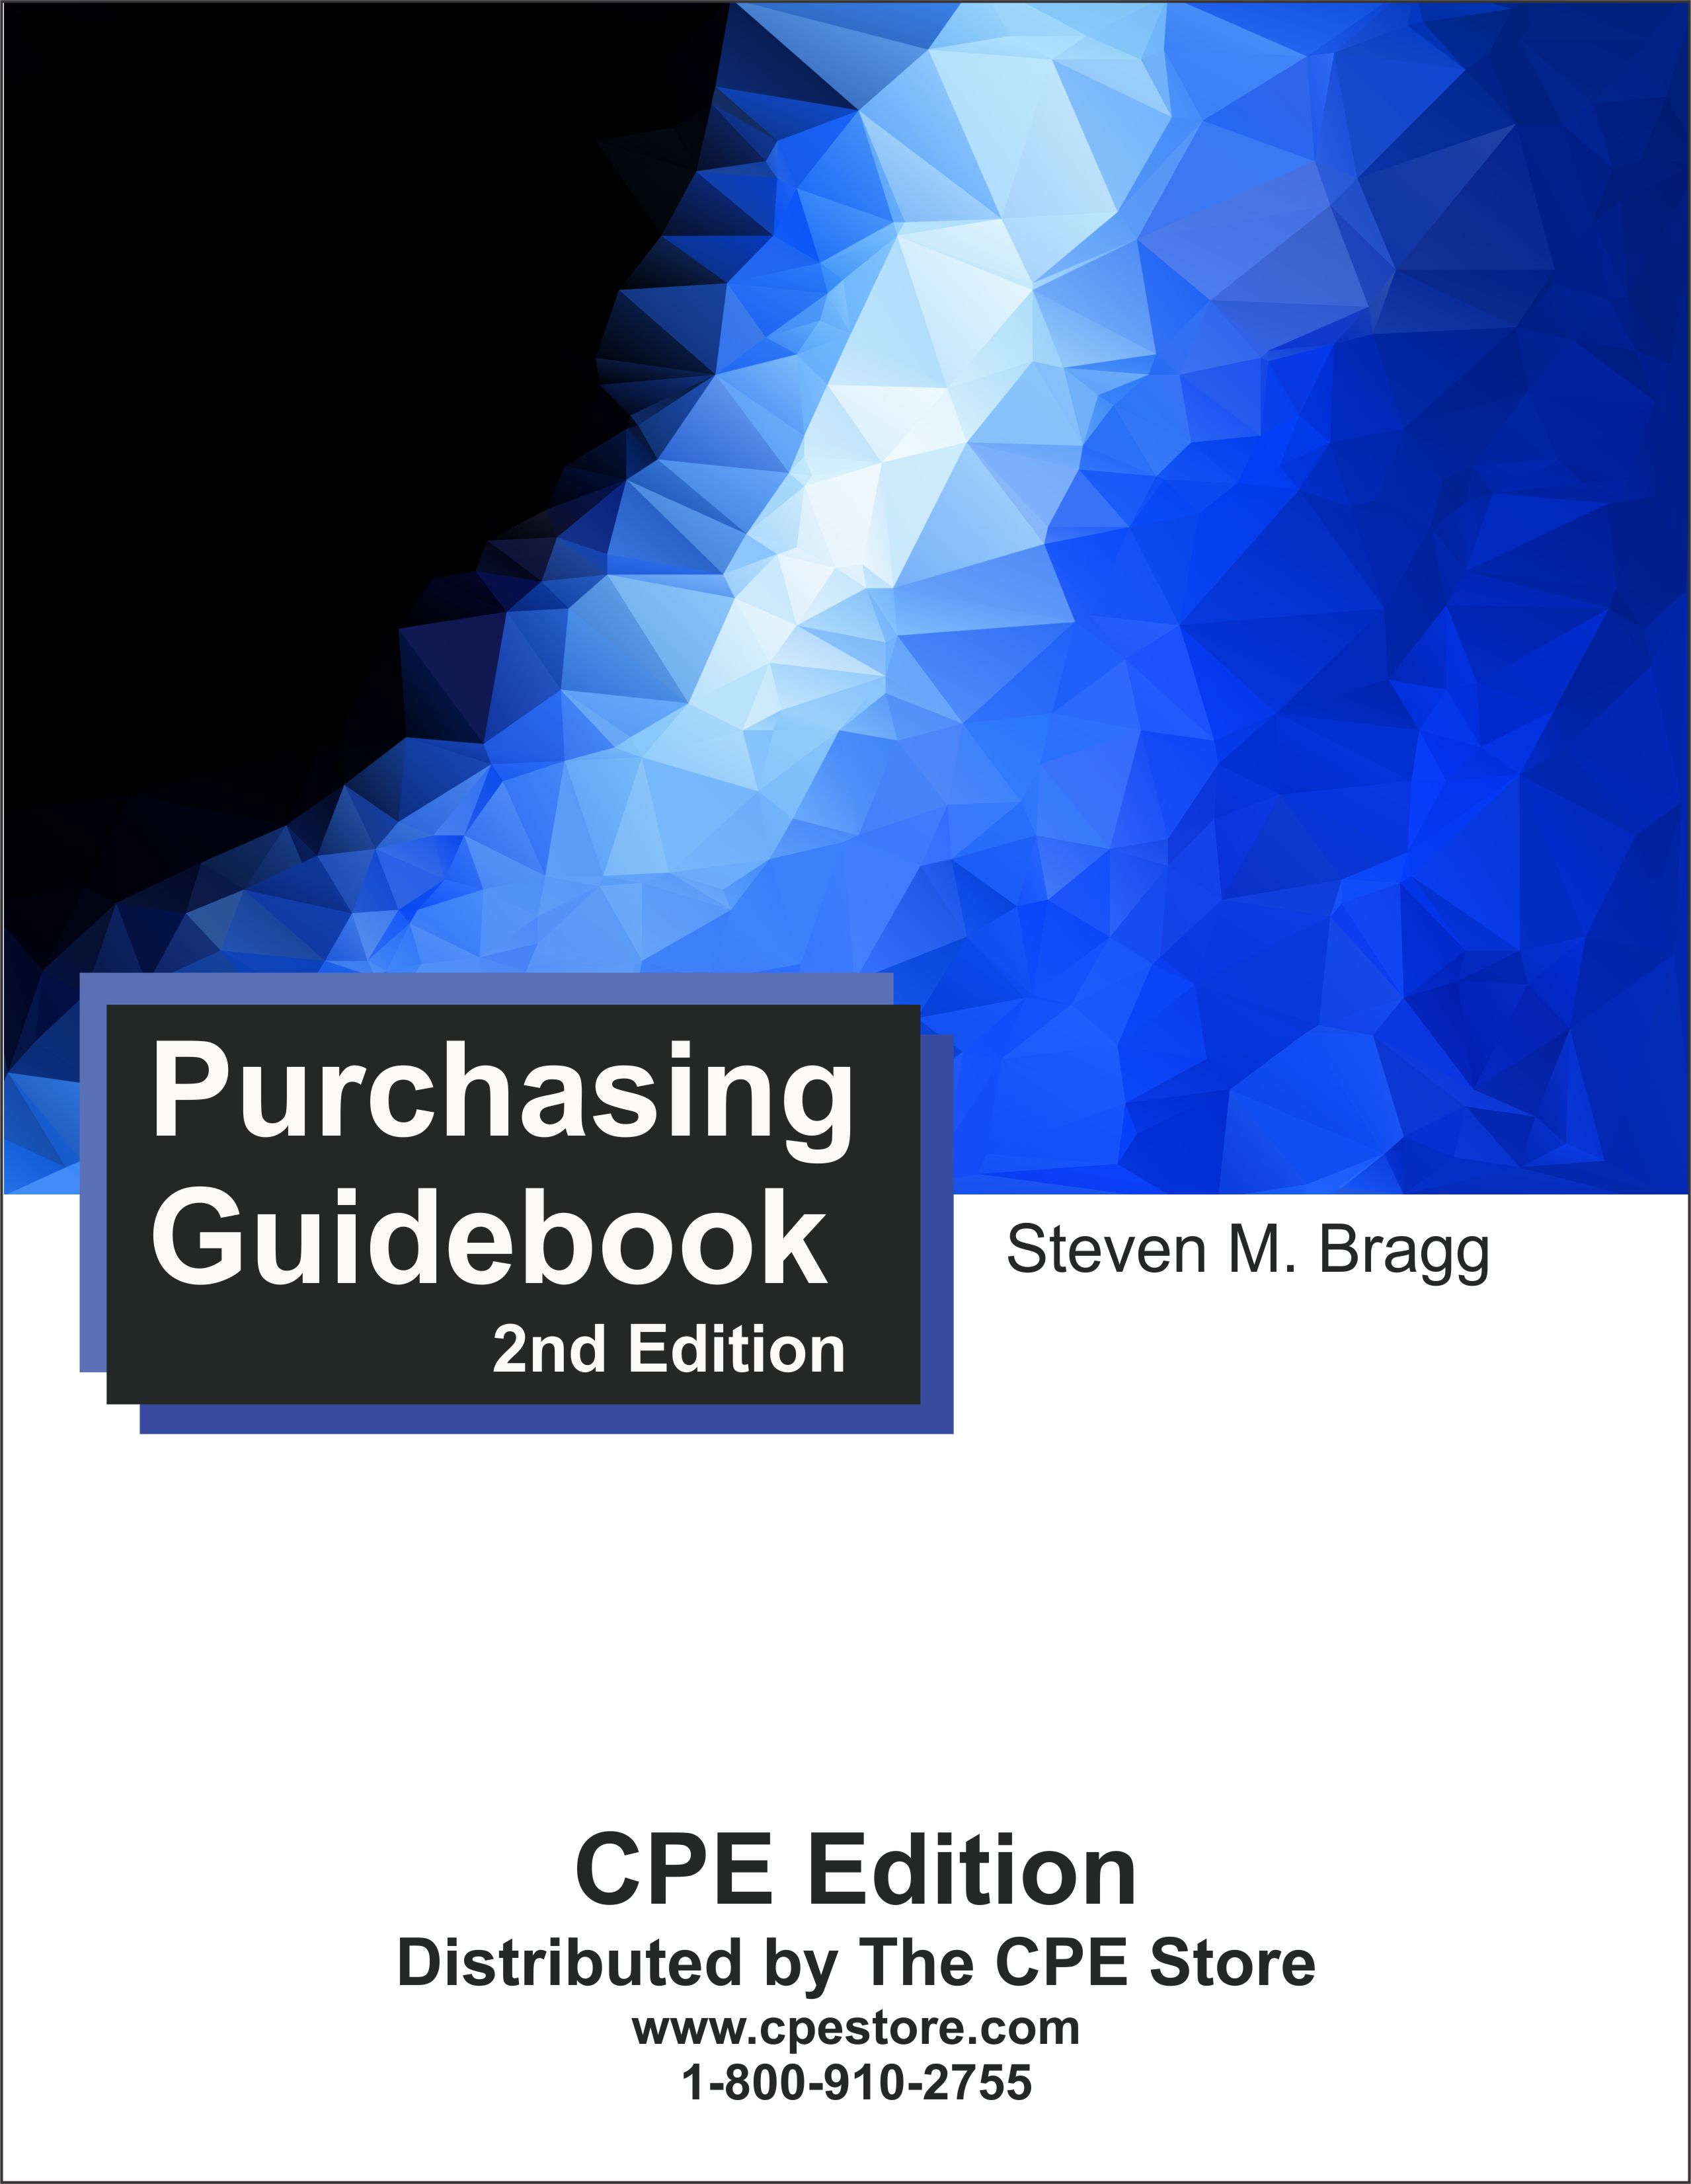 Purchasing Guidebook